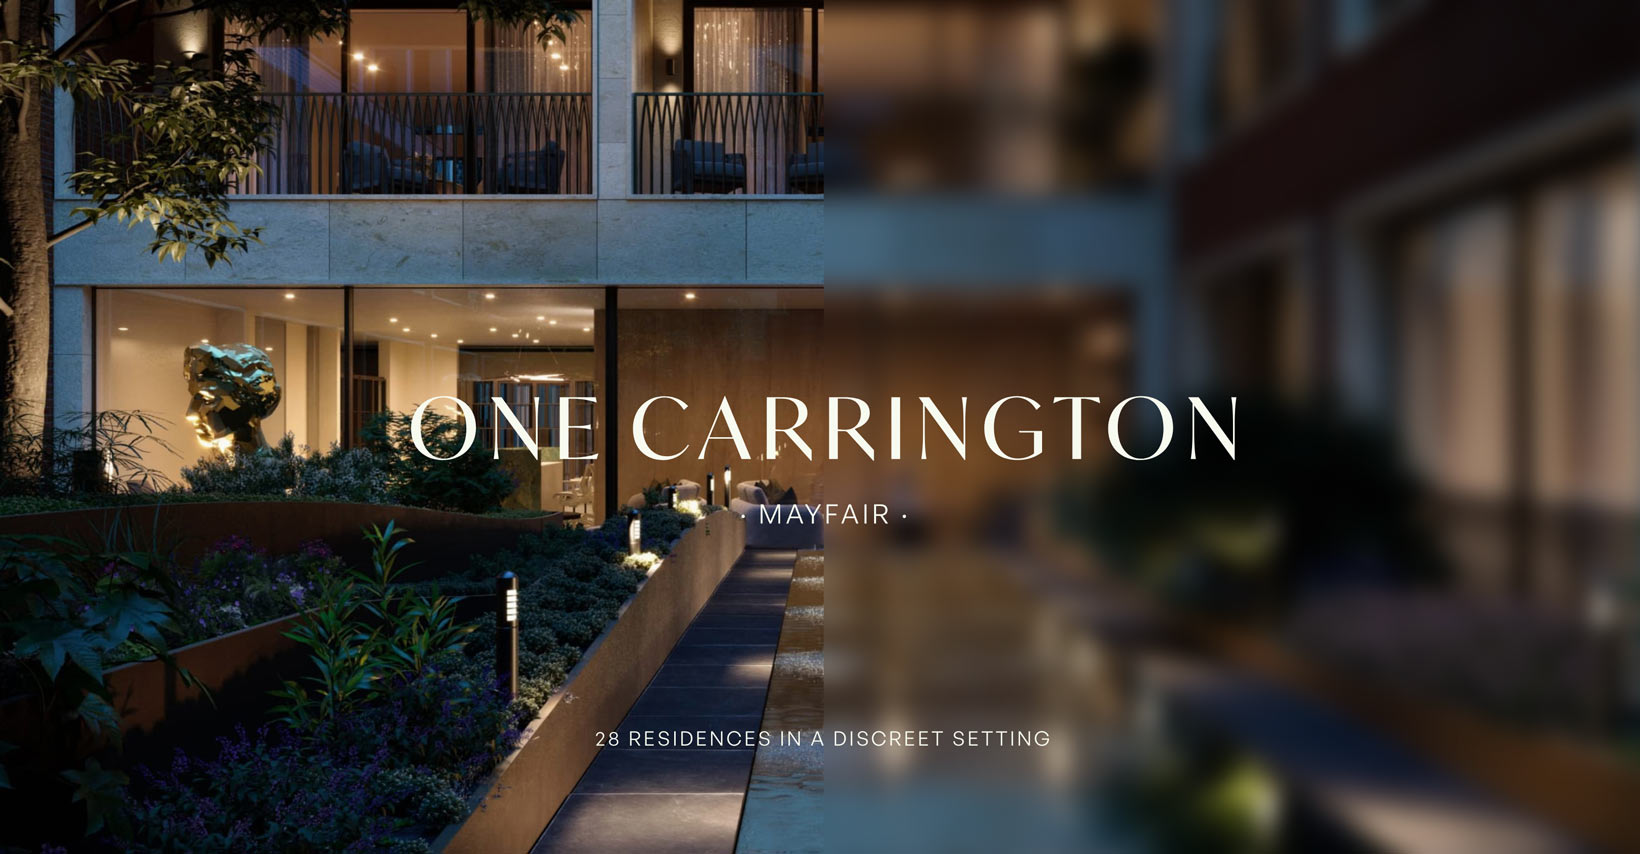 One Carrington development is now open for registration